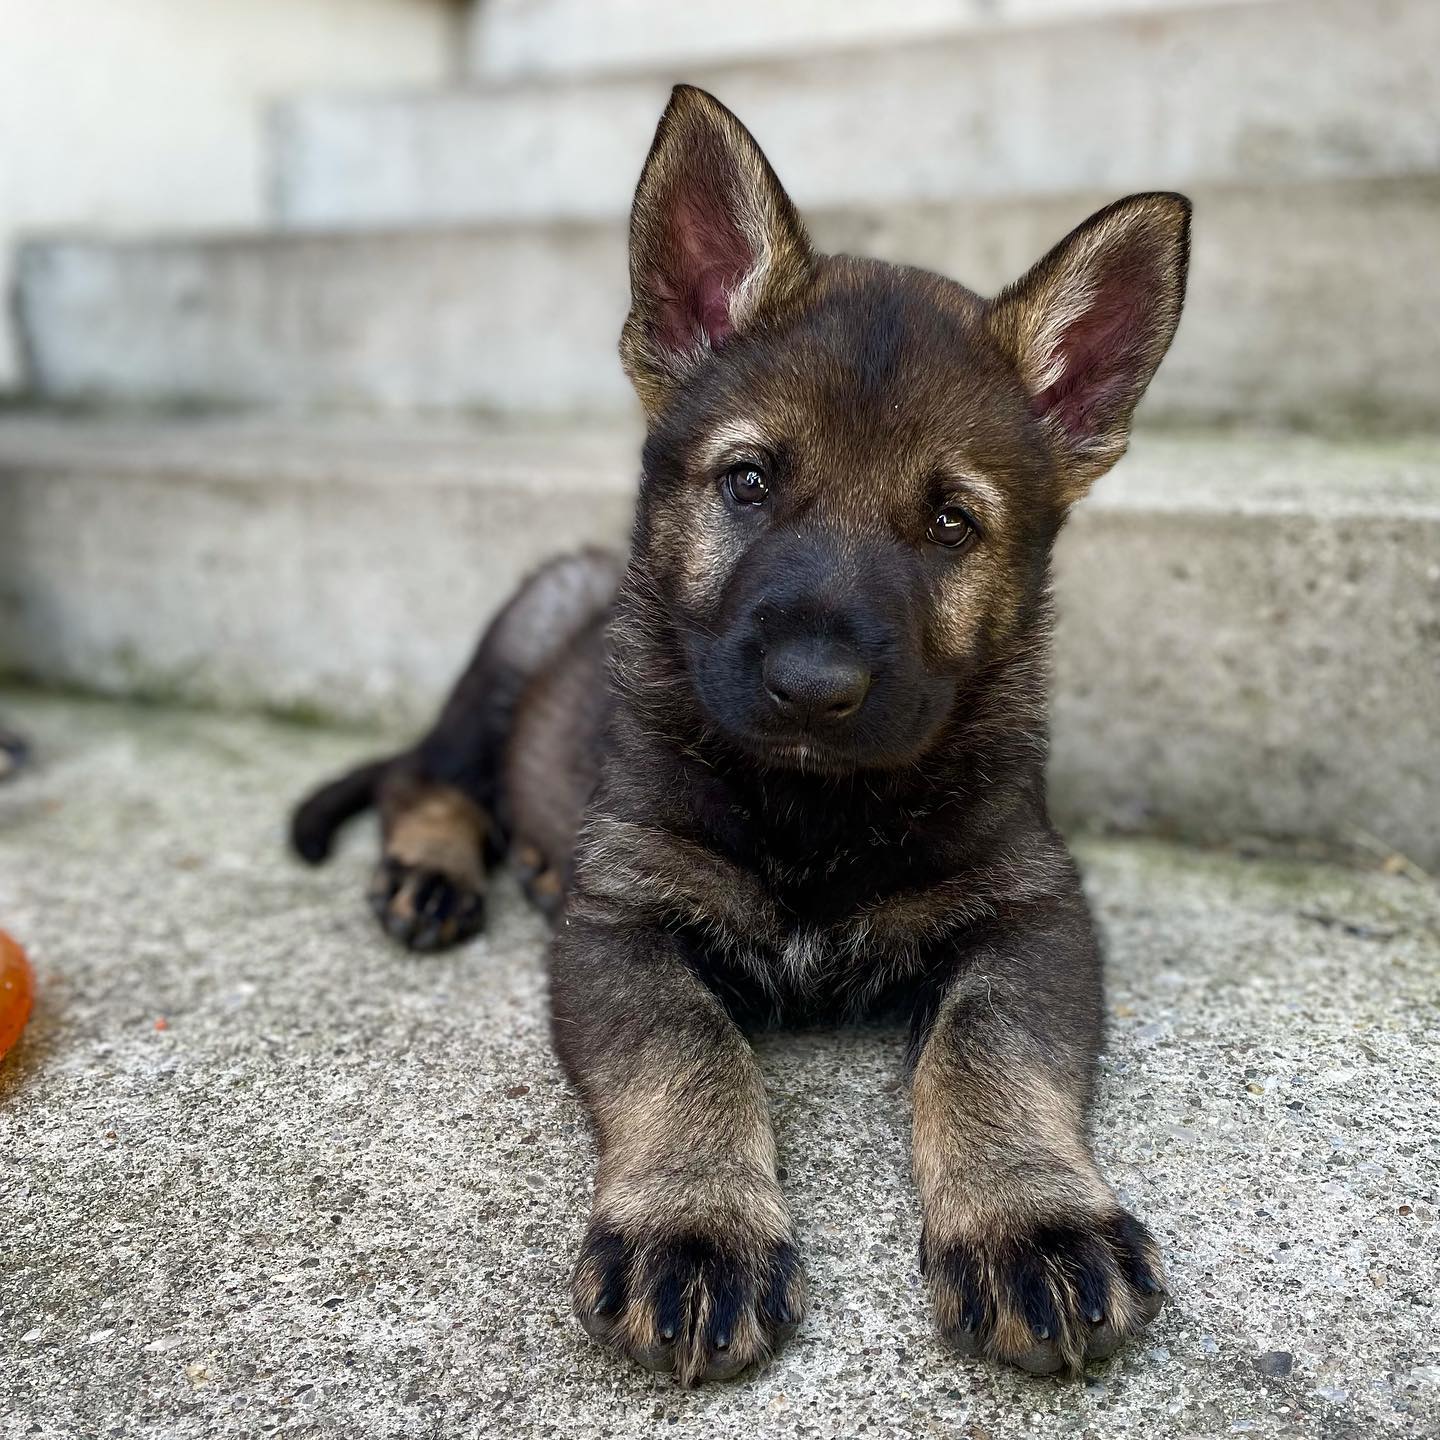 KEANU vom Hunnenkönig #puppy 
7 weeks old 

#germanshepherd #germansheperdsofinstagram #germansheperdpuppy #workingdogs #k9 #k9dog #policedog #dogsofinstagram #vomhunnenkönig #atillayueksel